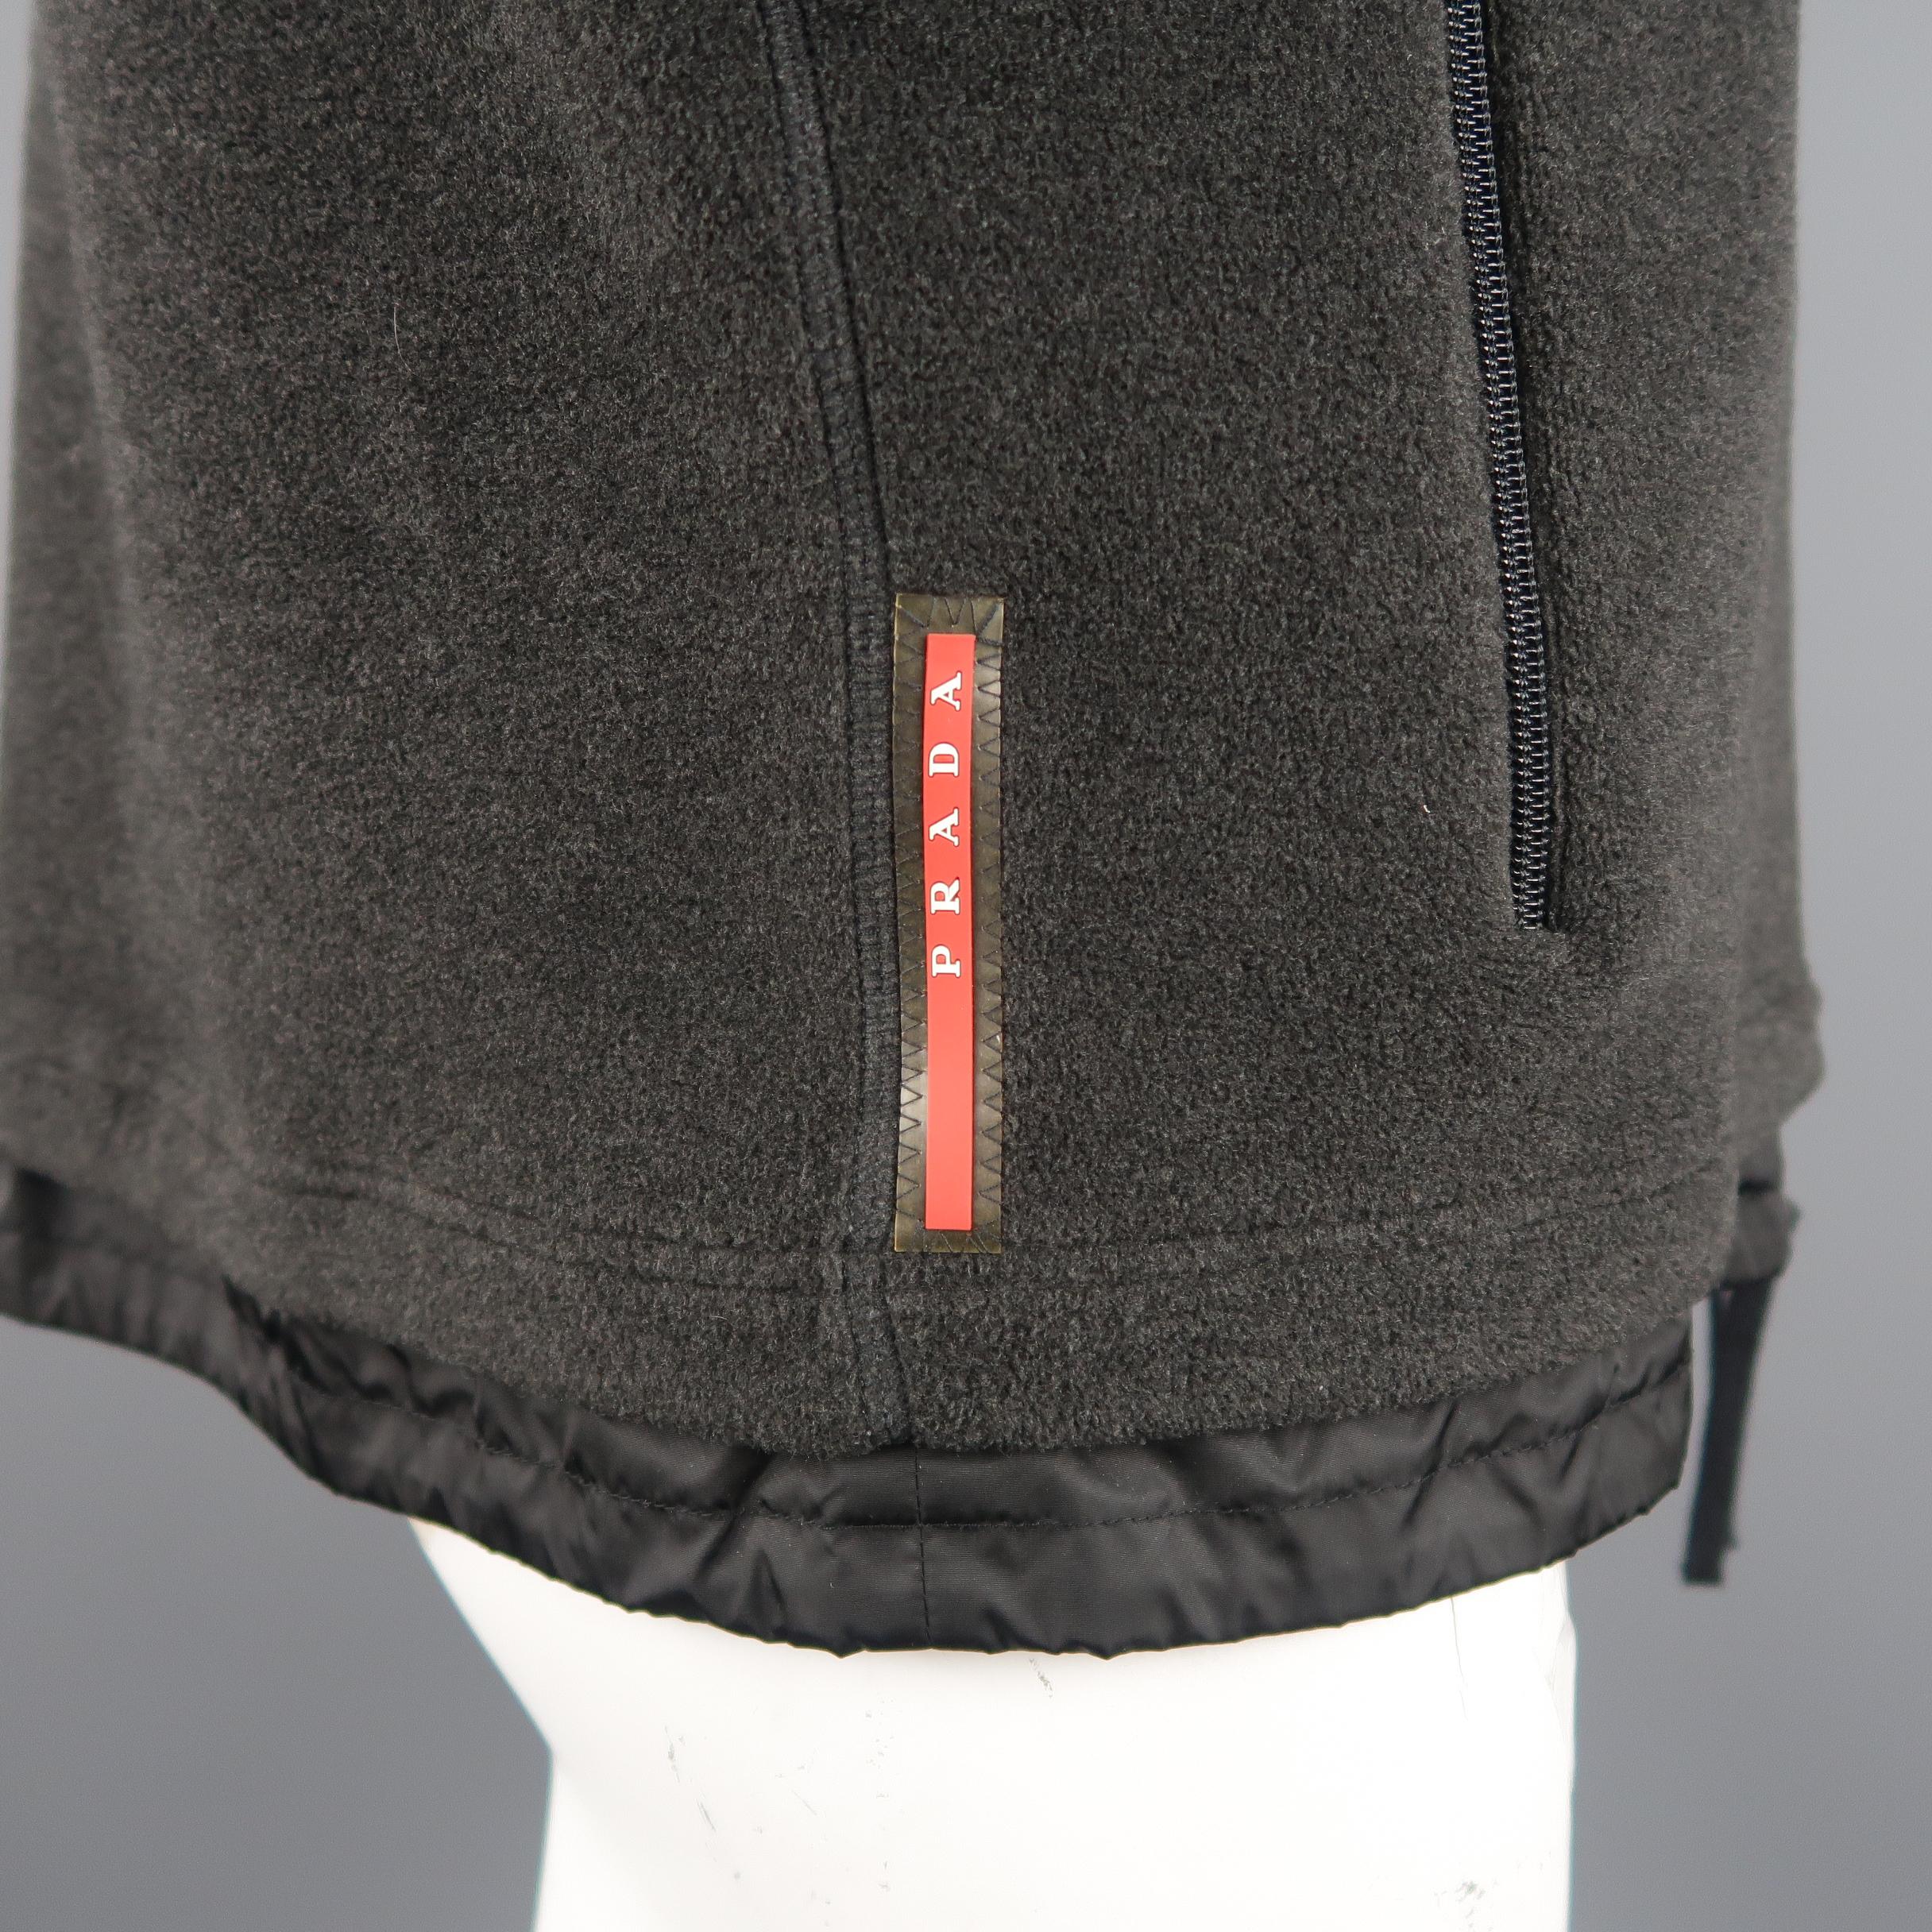 Men's PRADA XL Black & Charcoal Two Toned Fleece Jacket